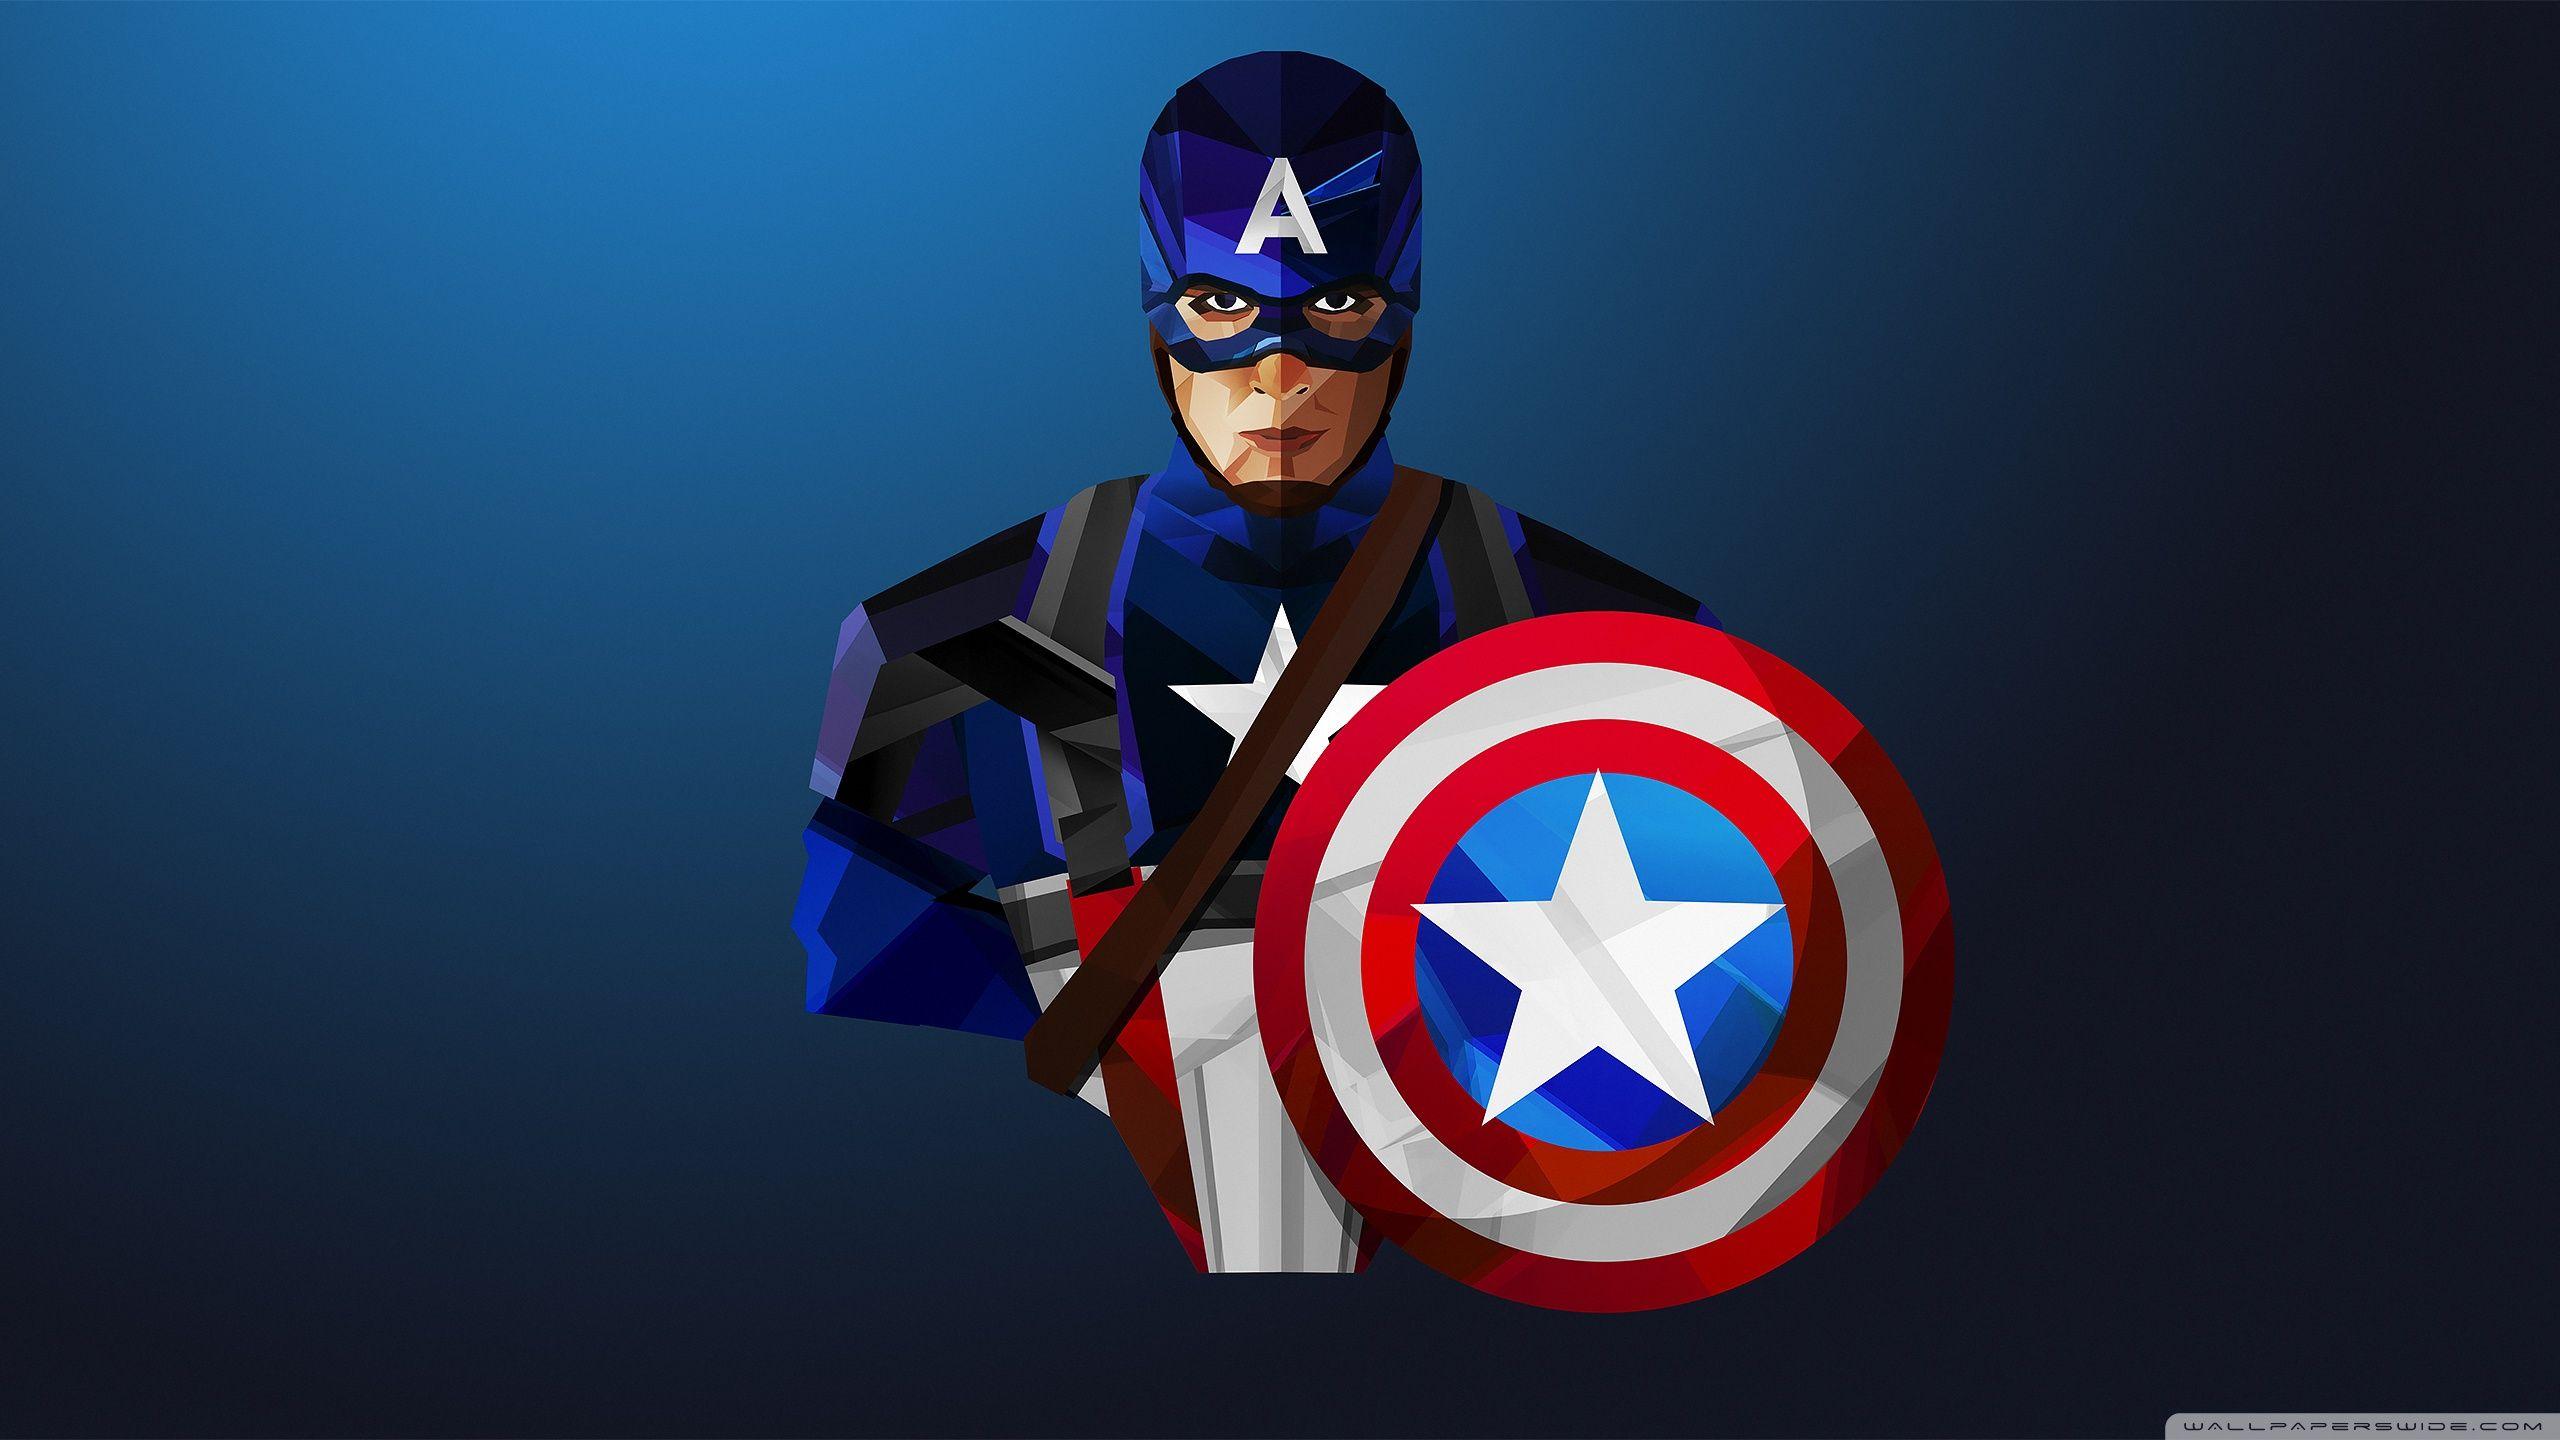 40 Captain America Fanart: Free High Resolution Wallpapers - Eggradients.com